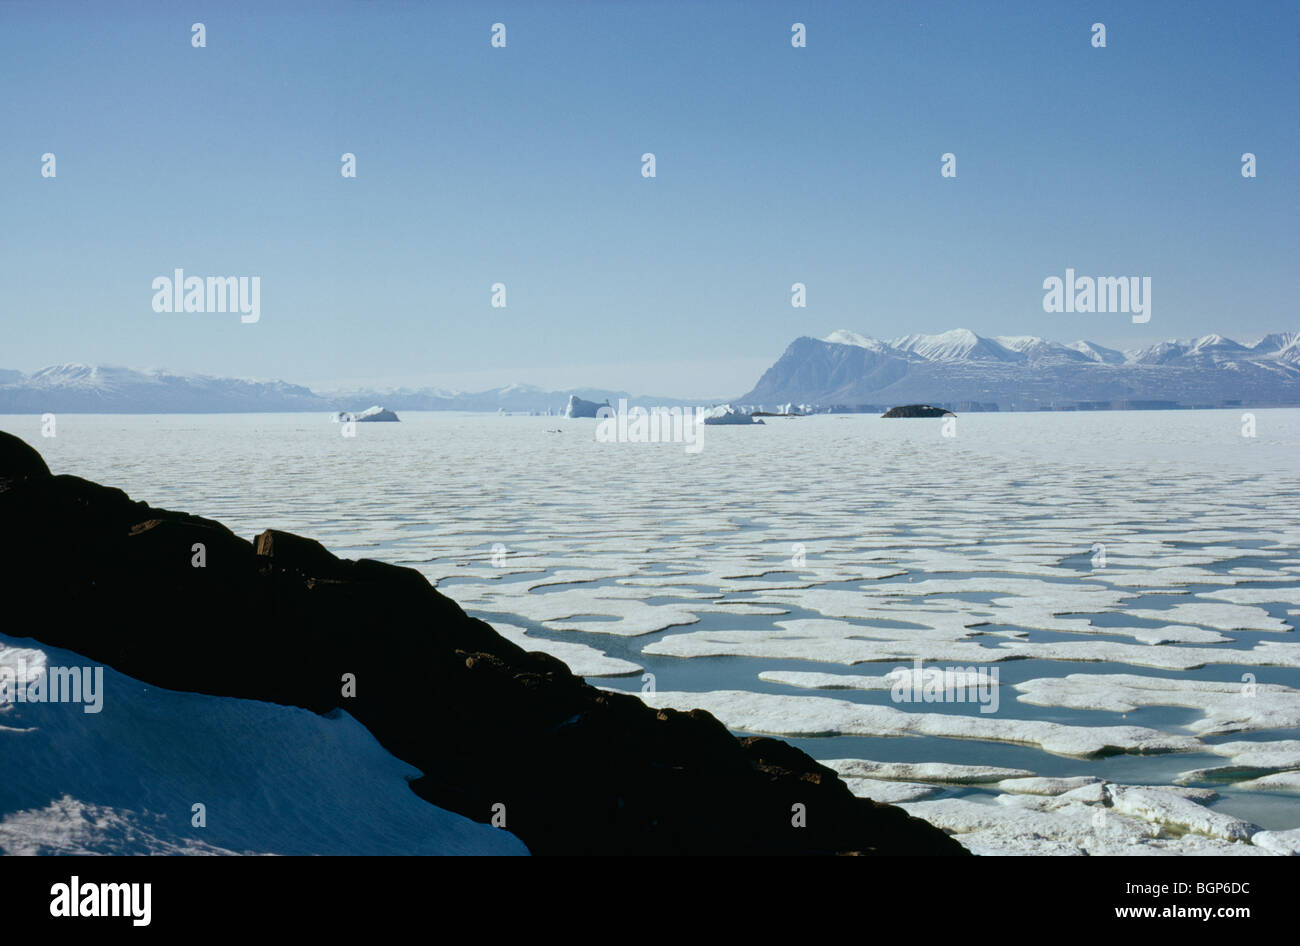 Ice floes nell'oceano, la Groenlandia. Foto Stock